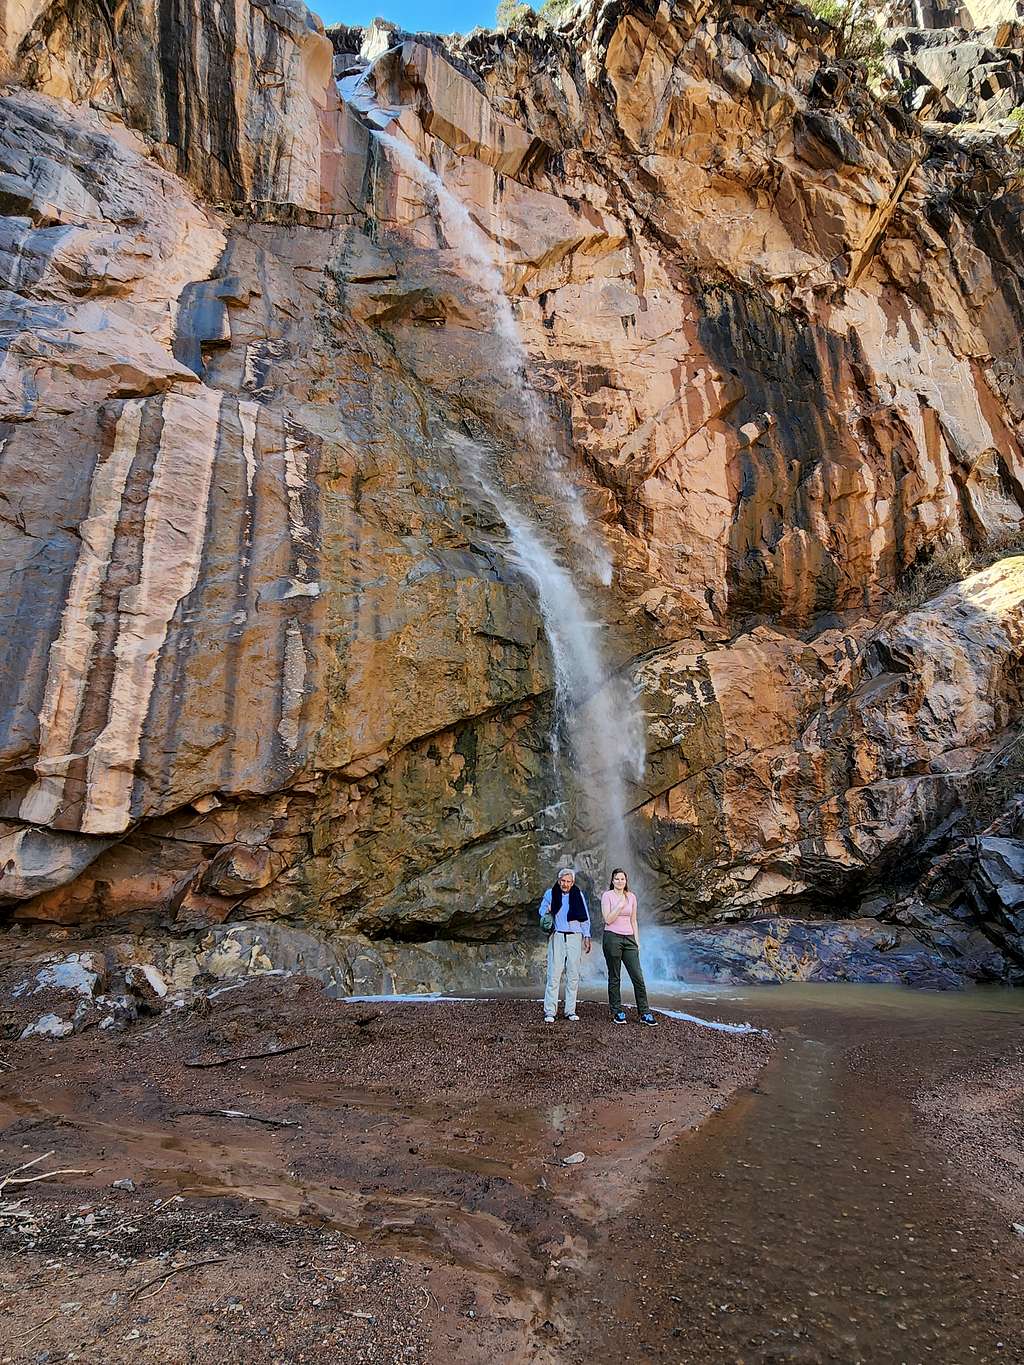 Waterfall in No Thoroughfare Canyon